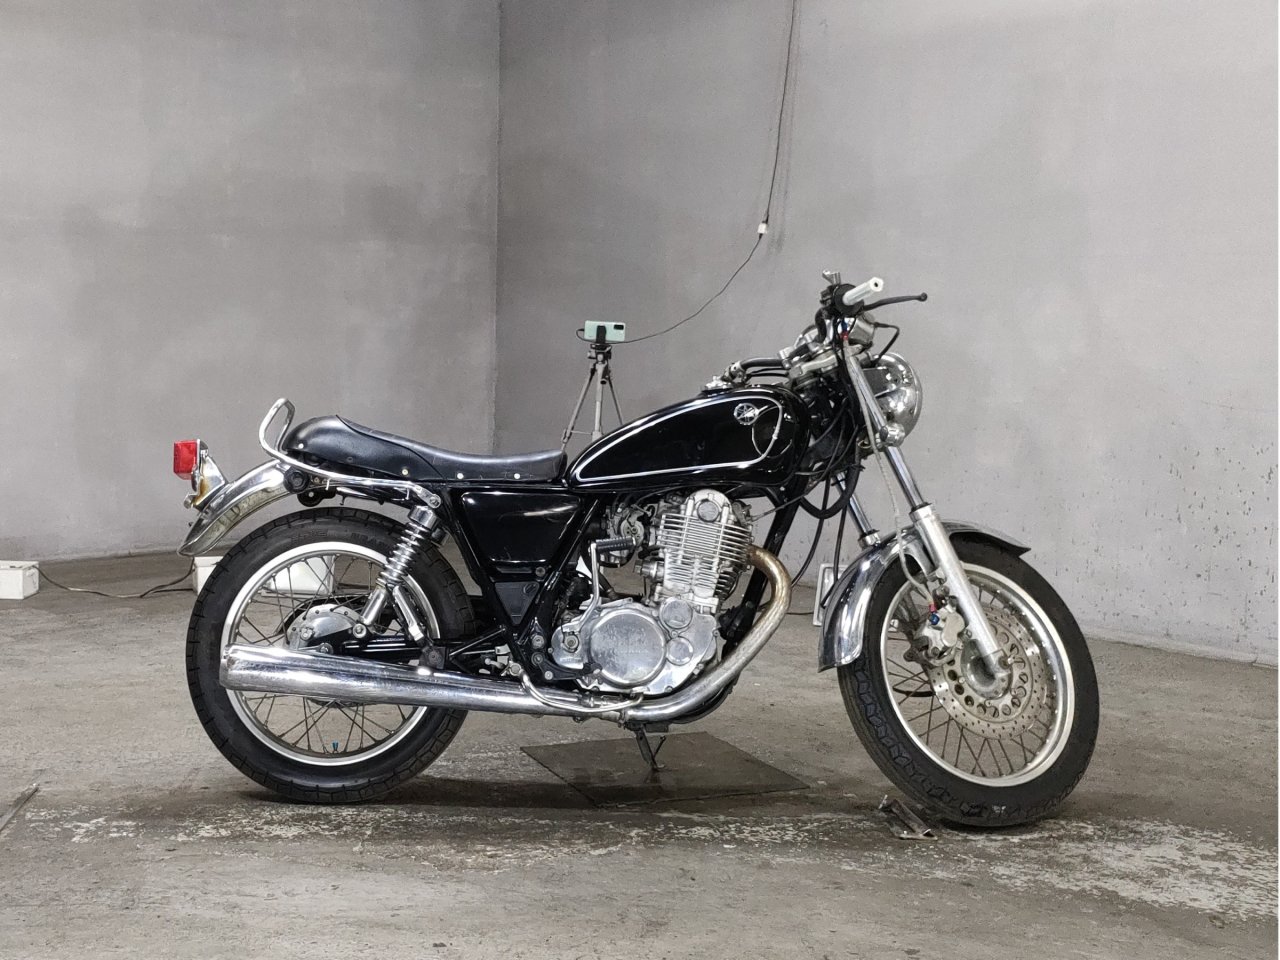 Yamaha SR400 - Adamoto - Motorcycles from Japan